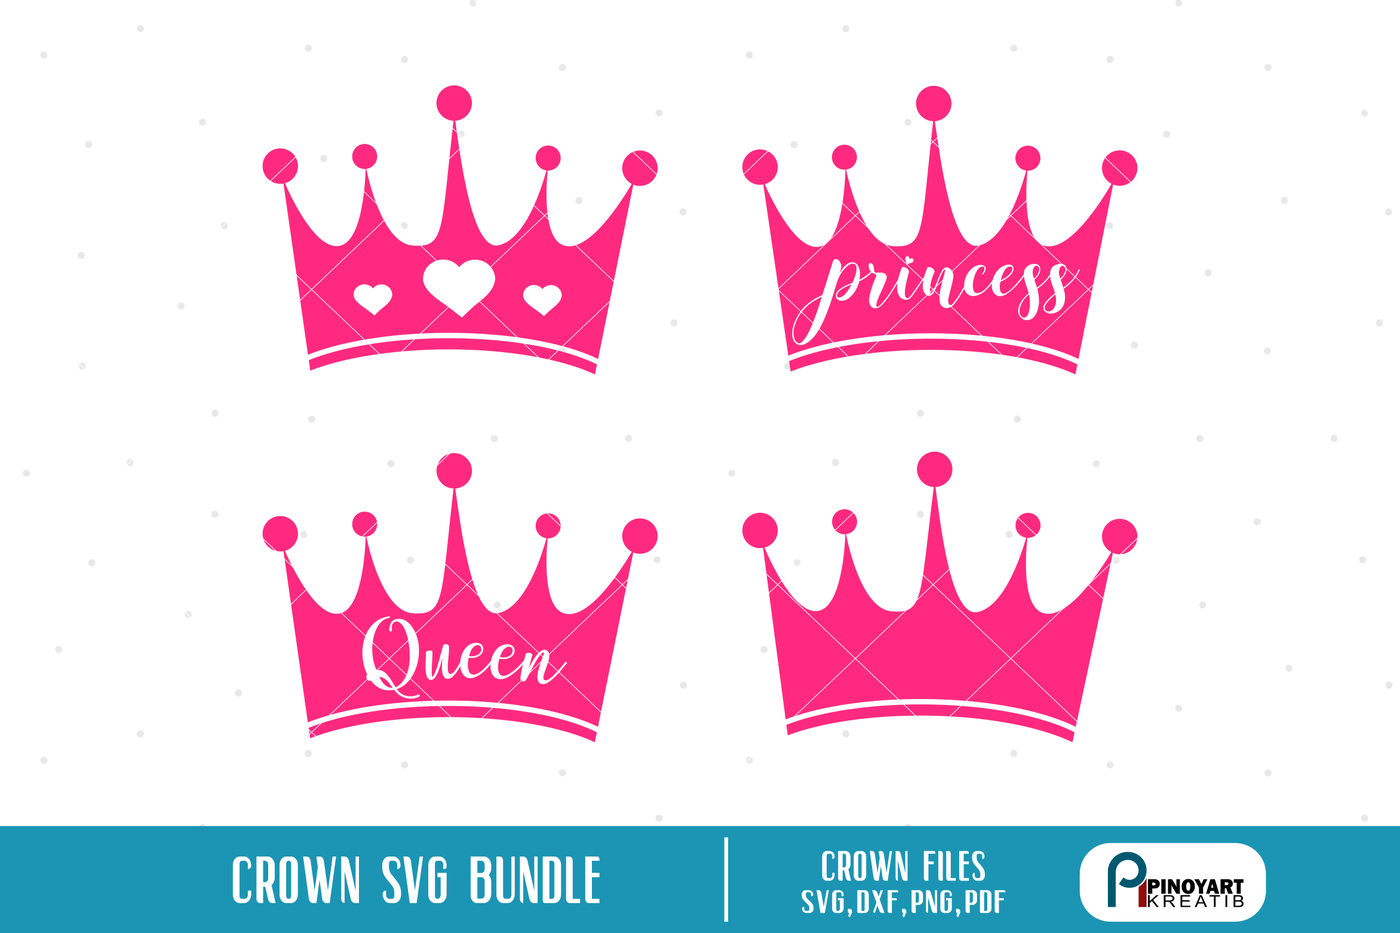 Crown Svg Crown Svg File Crown Dxf File Princess Crown Svg Queen Svg By Pinoyart Thehungryjpeg Com